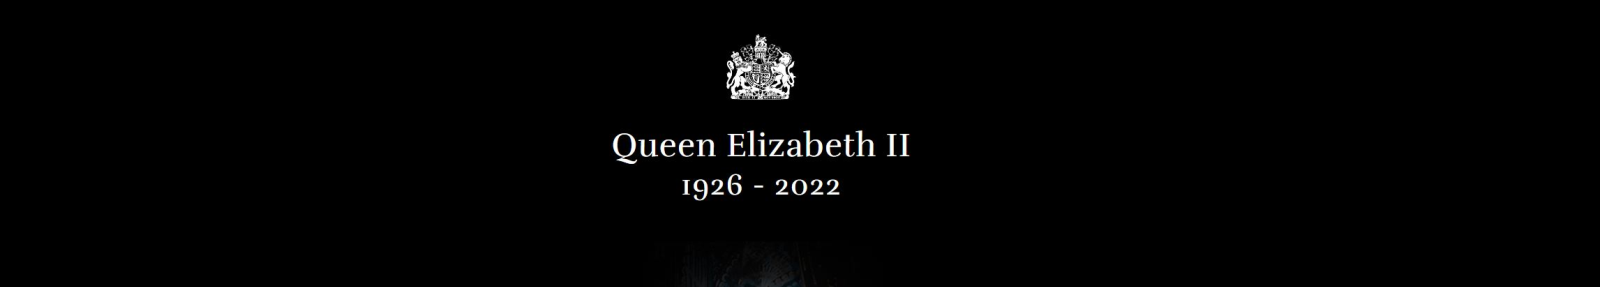 Black banner in memorium to Queen Elizabeth